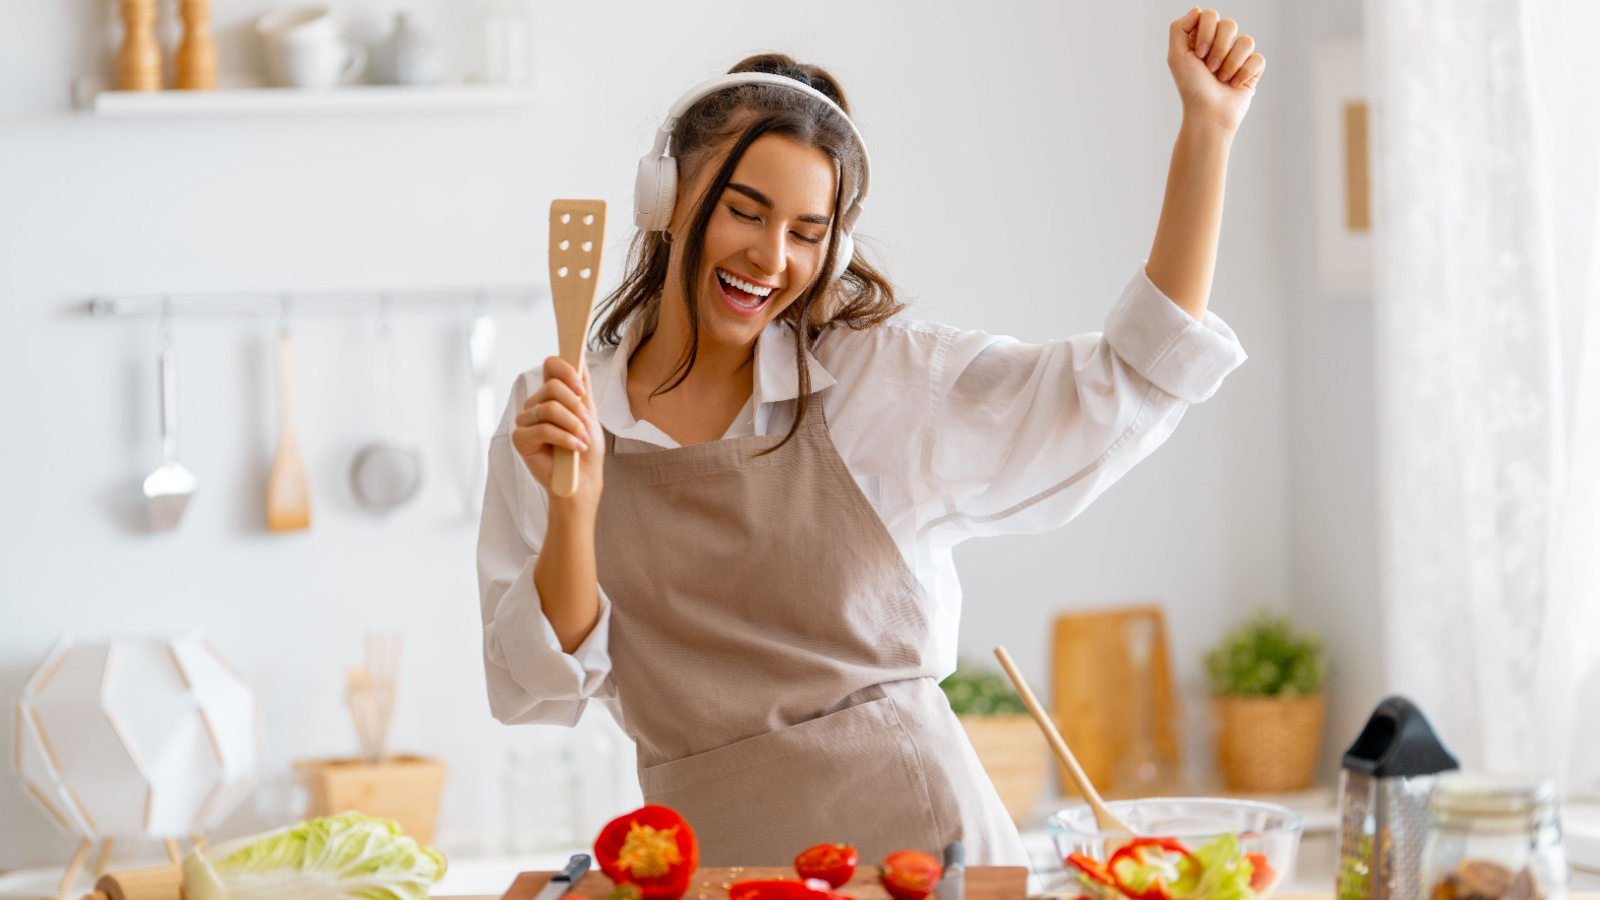 Cooking Woman Meal Prep Healthy Singing Yuganov Konstantin Shutterstock